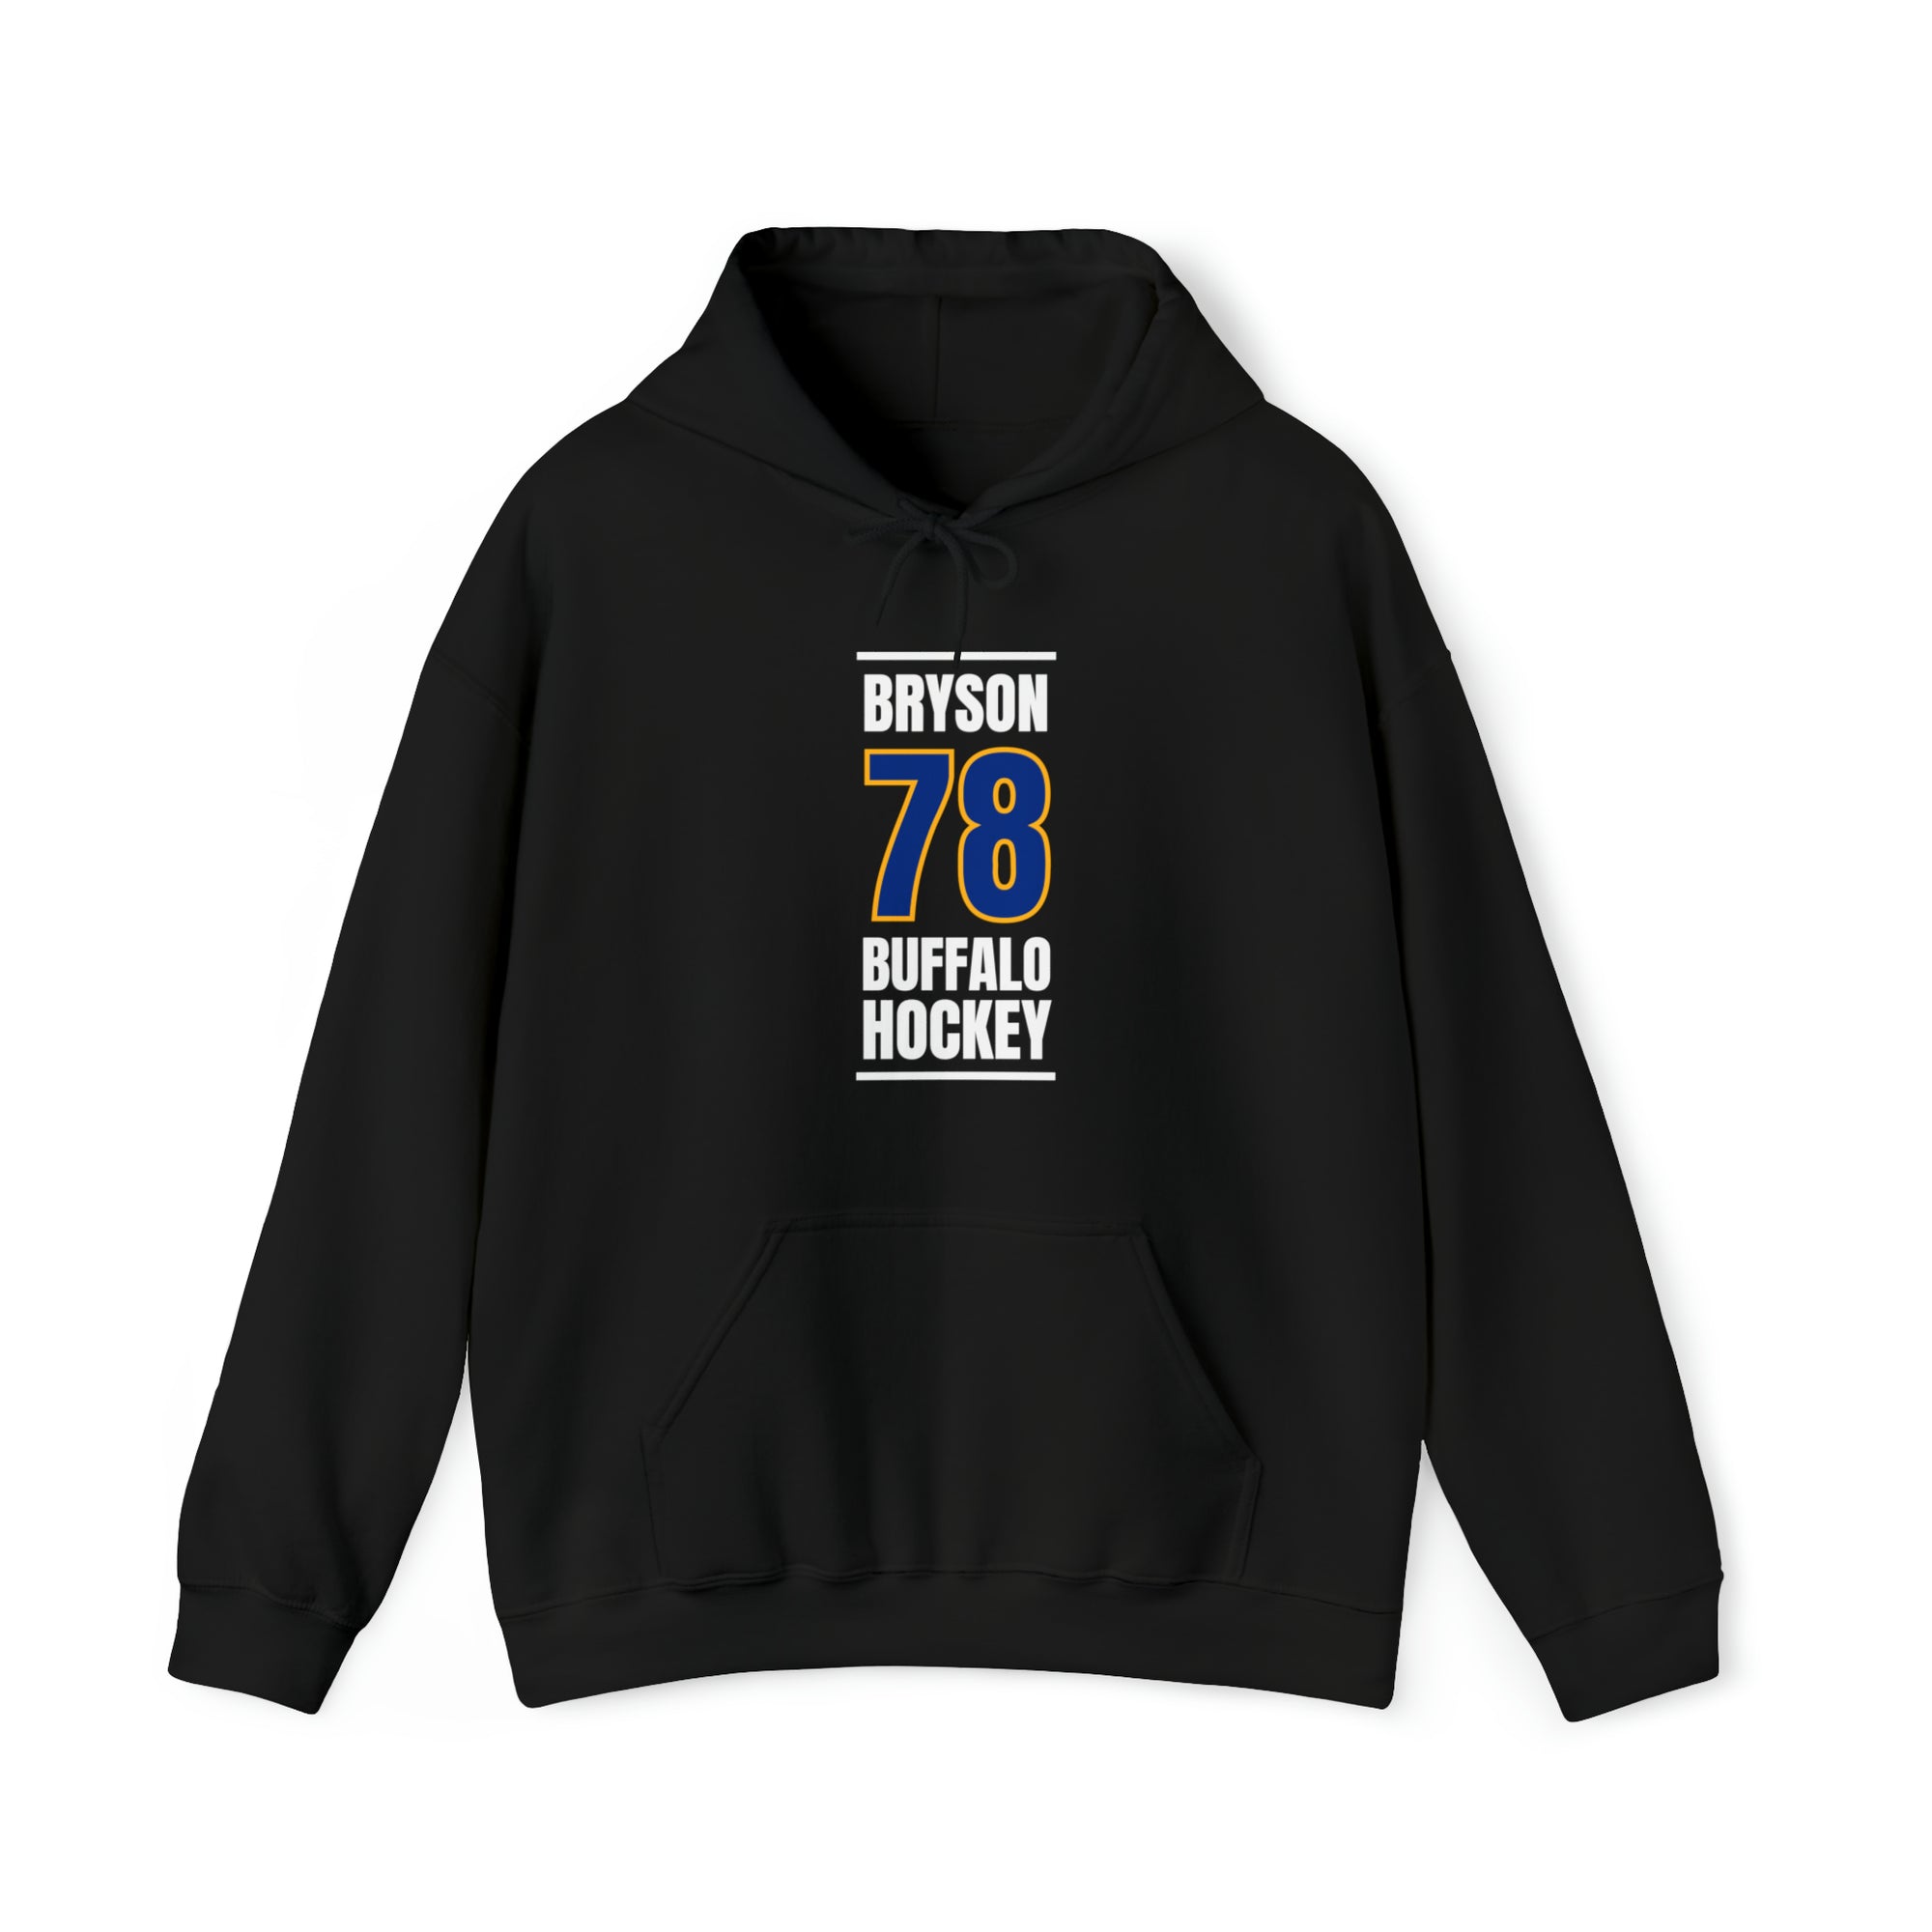 Bryson 78 Buffalo Hockey Royal Blue Vertical Design Unisex Hooded Sweatshirt